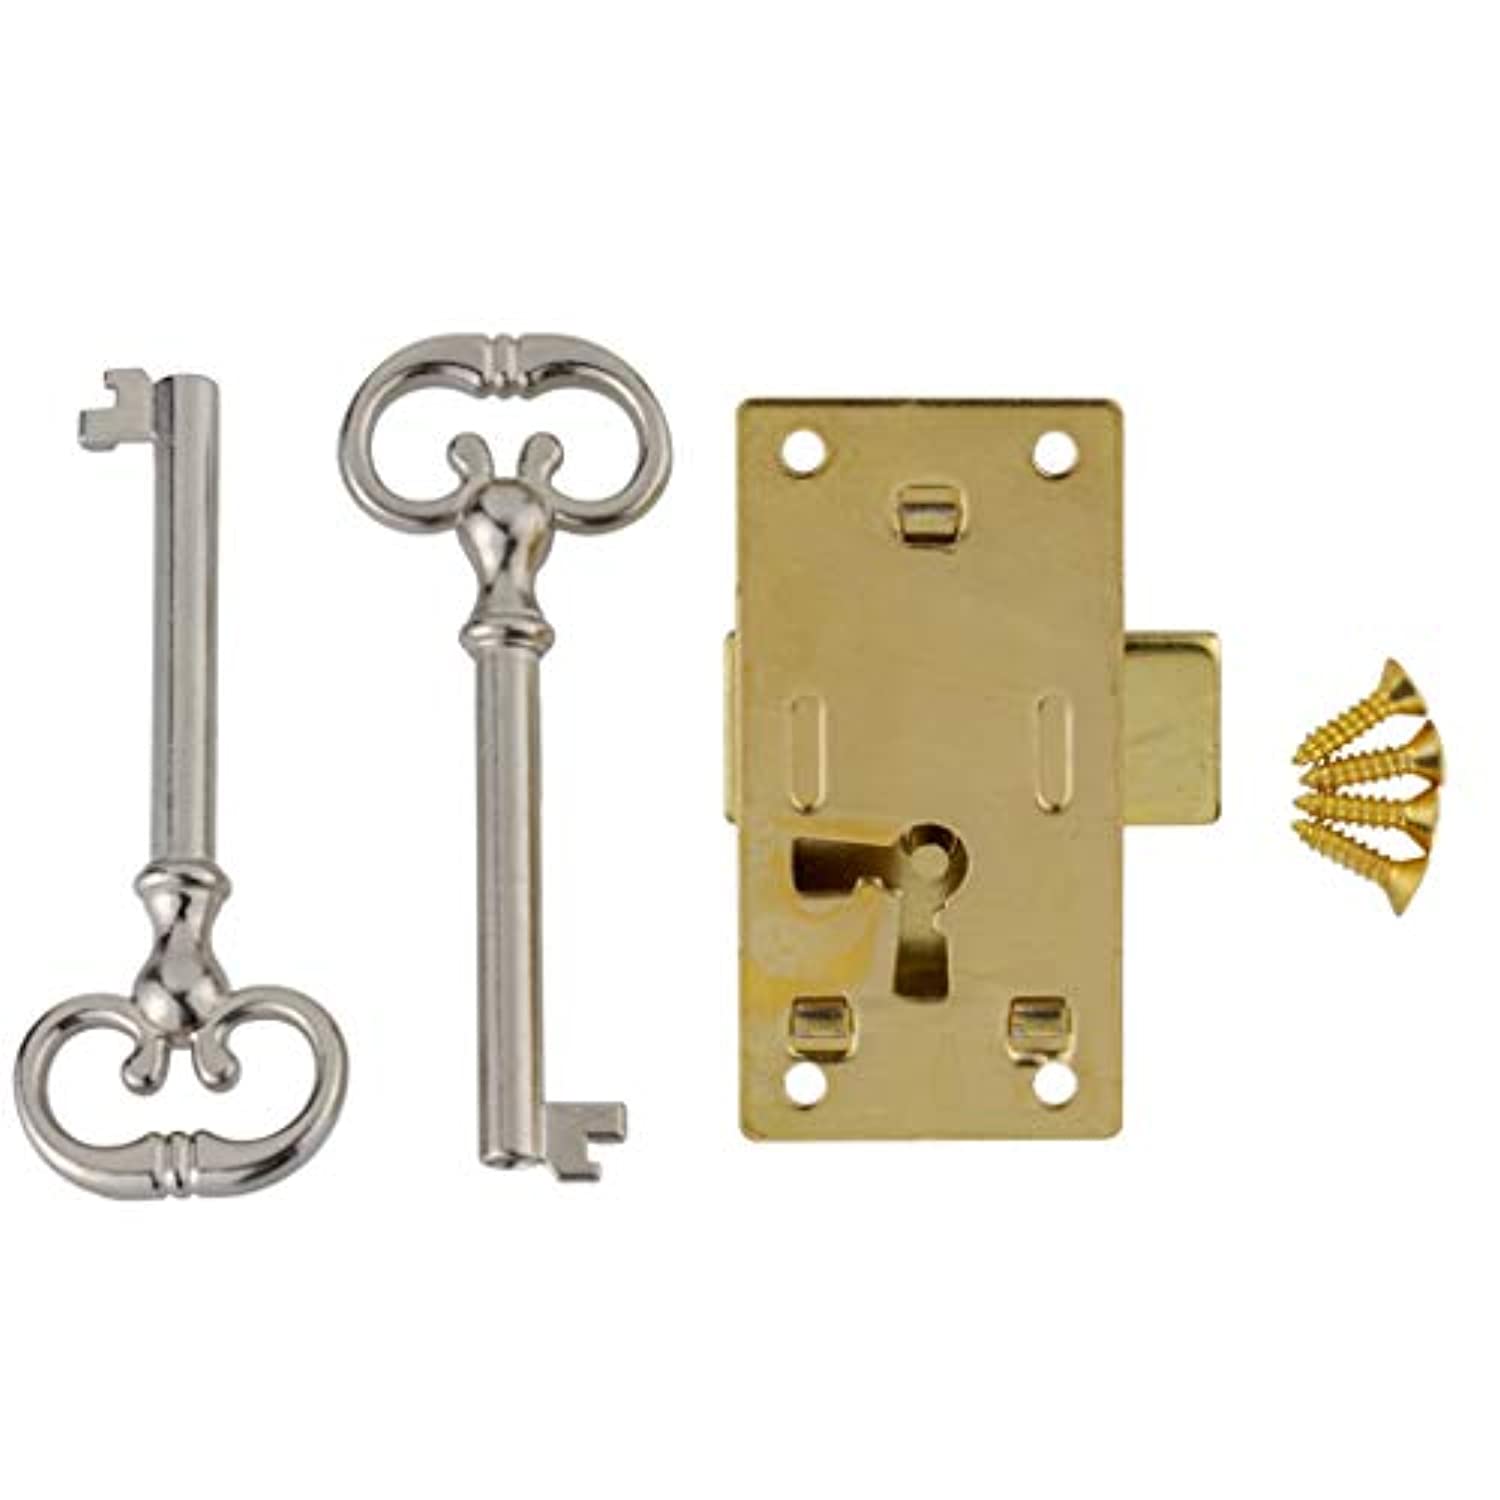 UNIQANTIQ HARDWARE SUPPLY small antique brass flush mount lock for cabinet  doors or dresser drawers w/